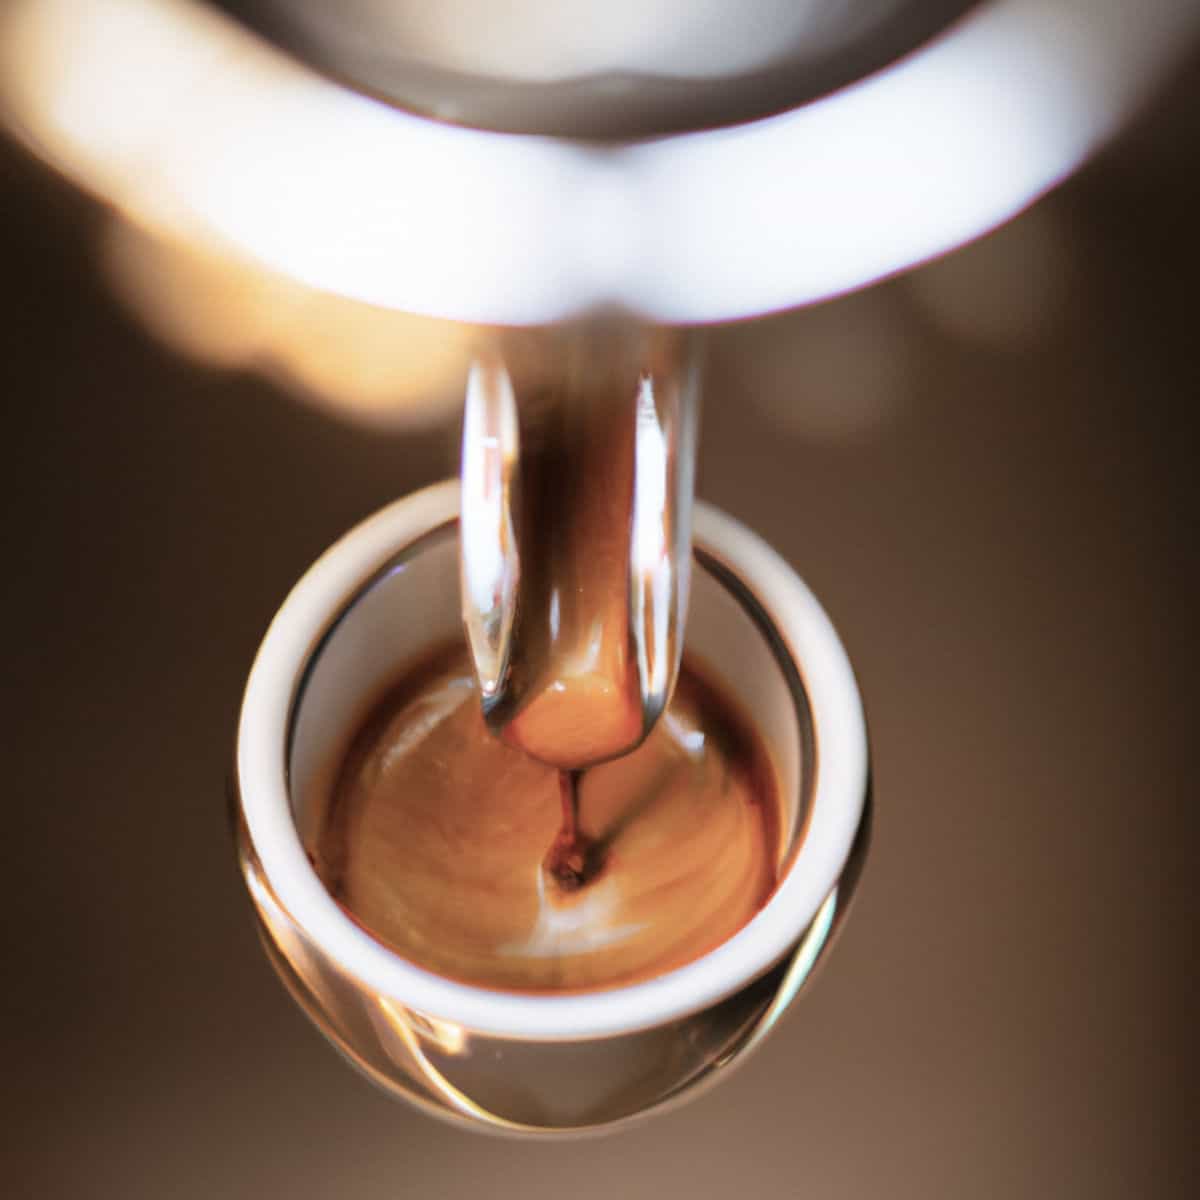 espresso shot being poured into an espresso cup